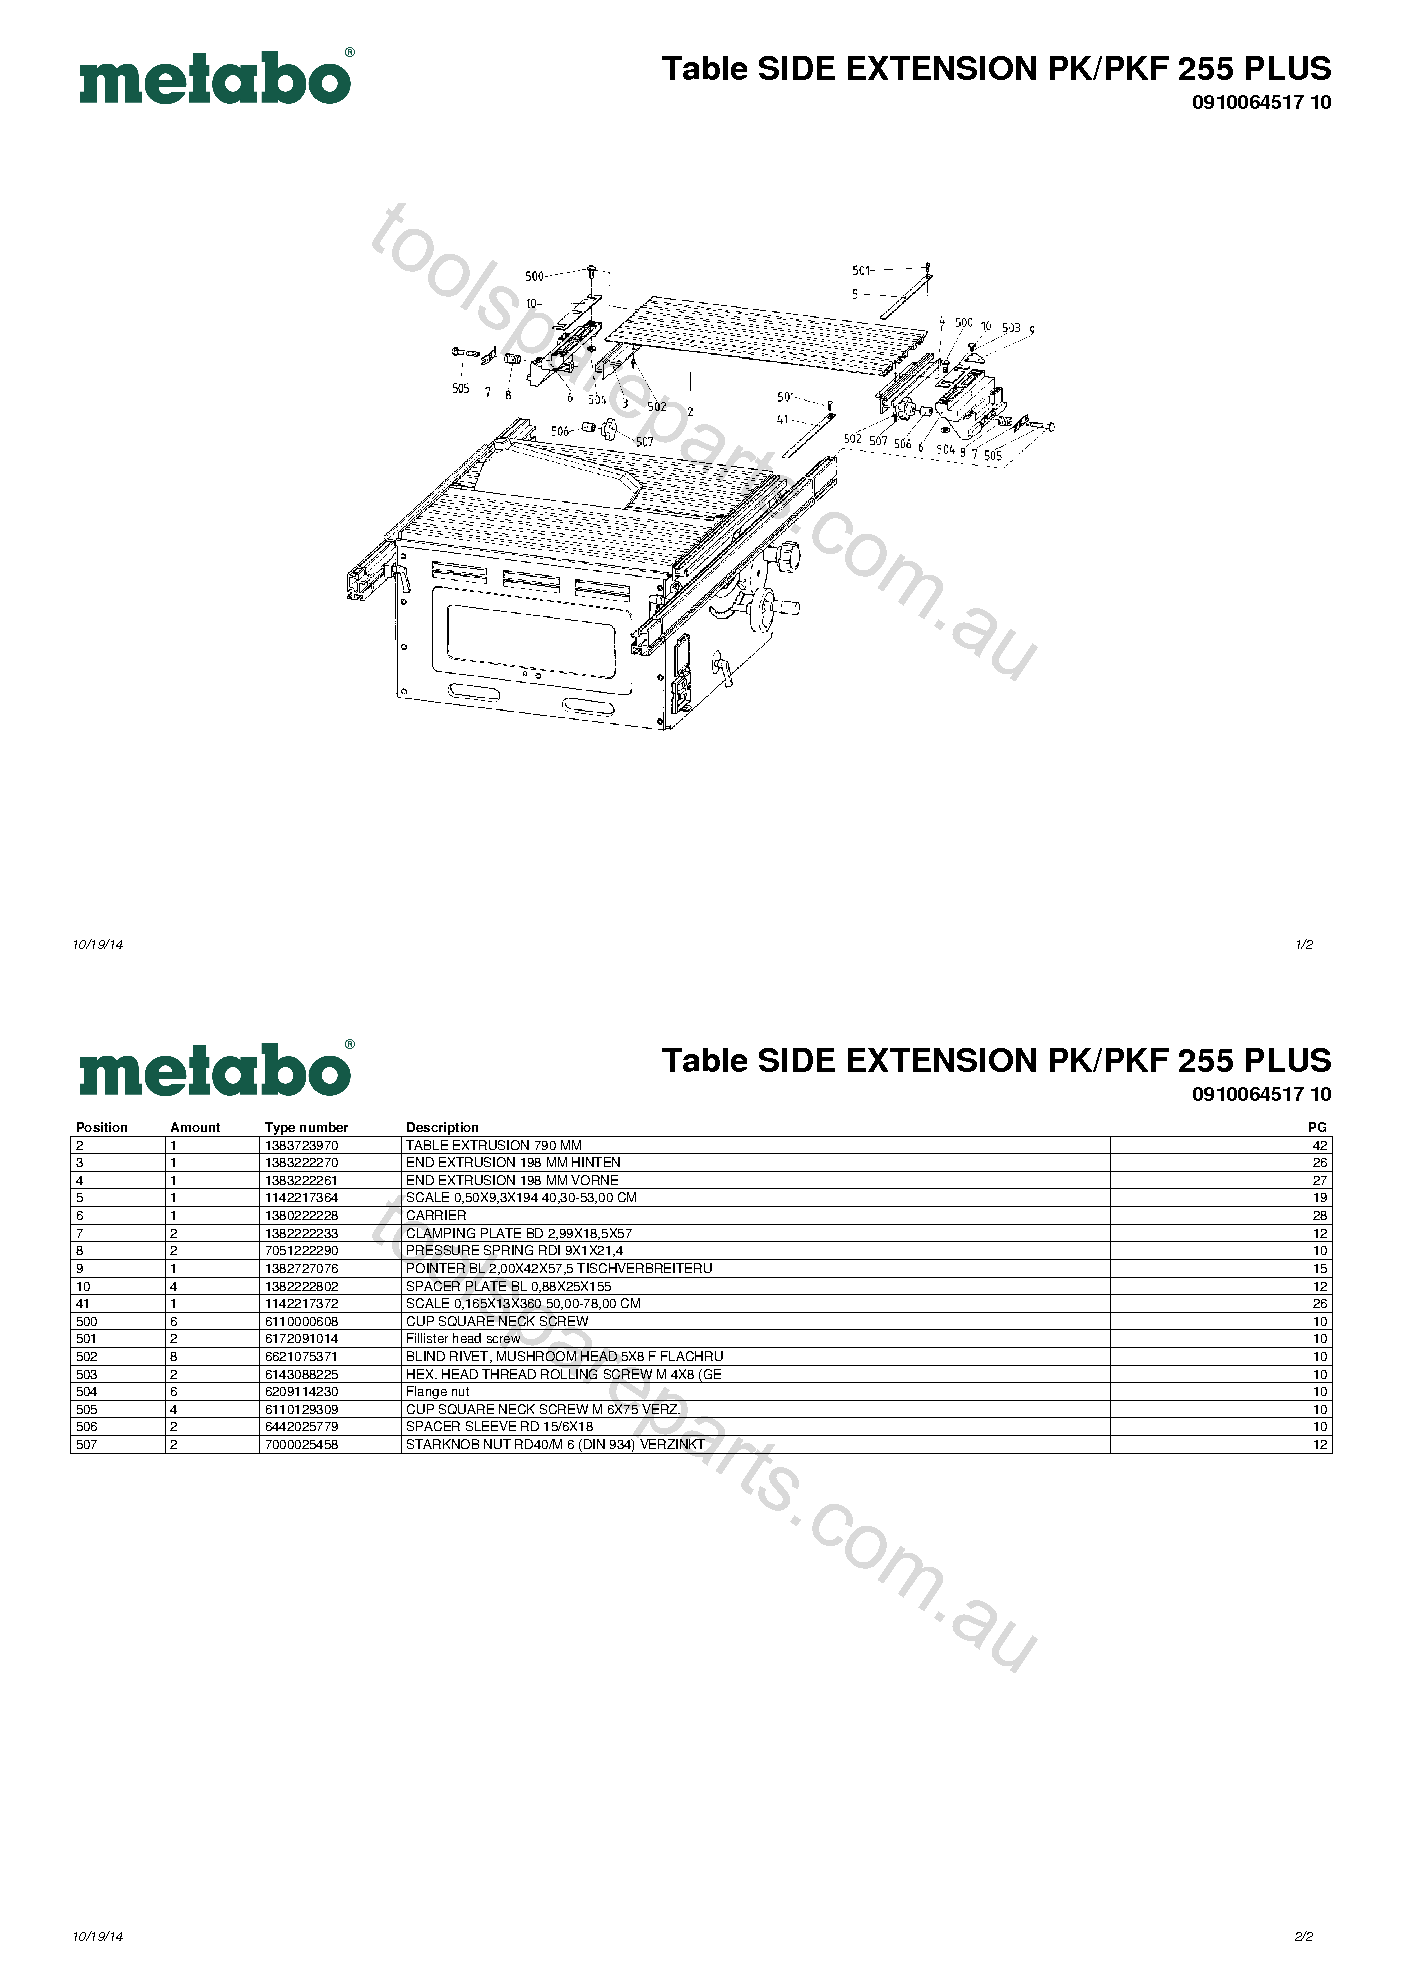 Metabo Table SIDE EXTENSION PK/PKF 255 PLUS 0910064517 10  Diagram 1